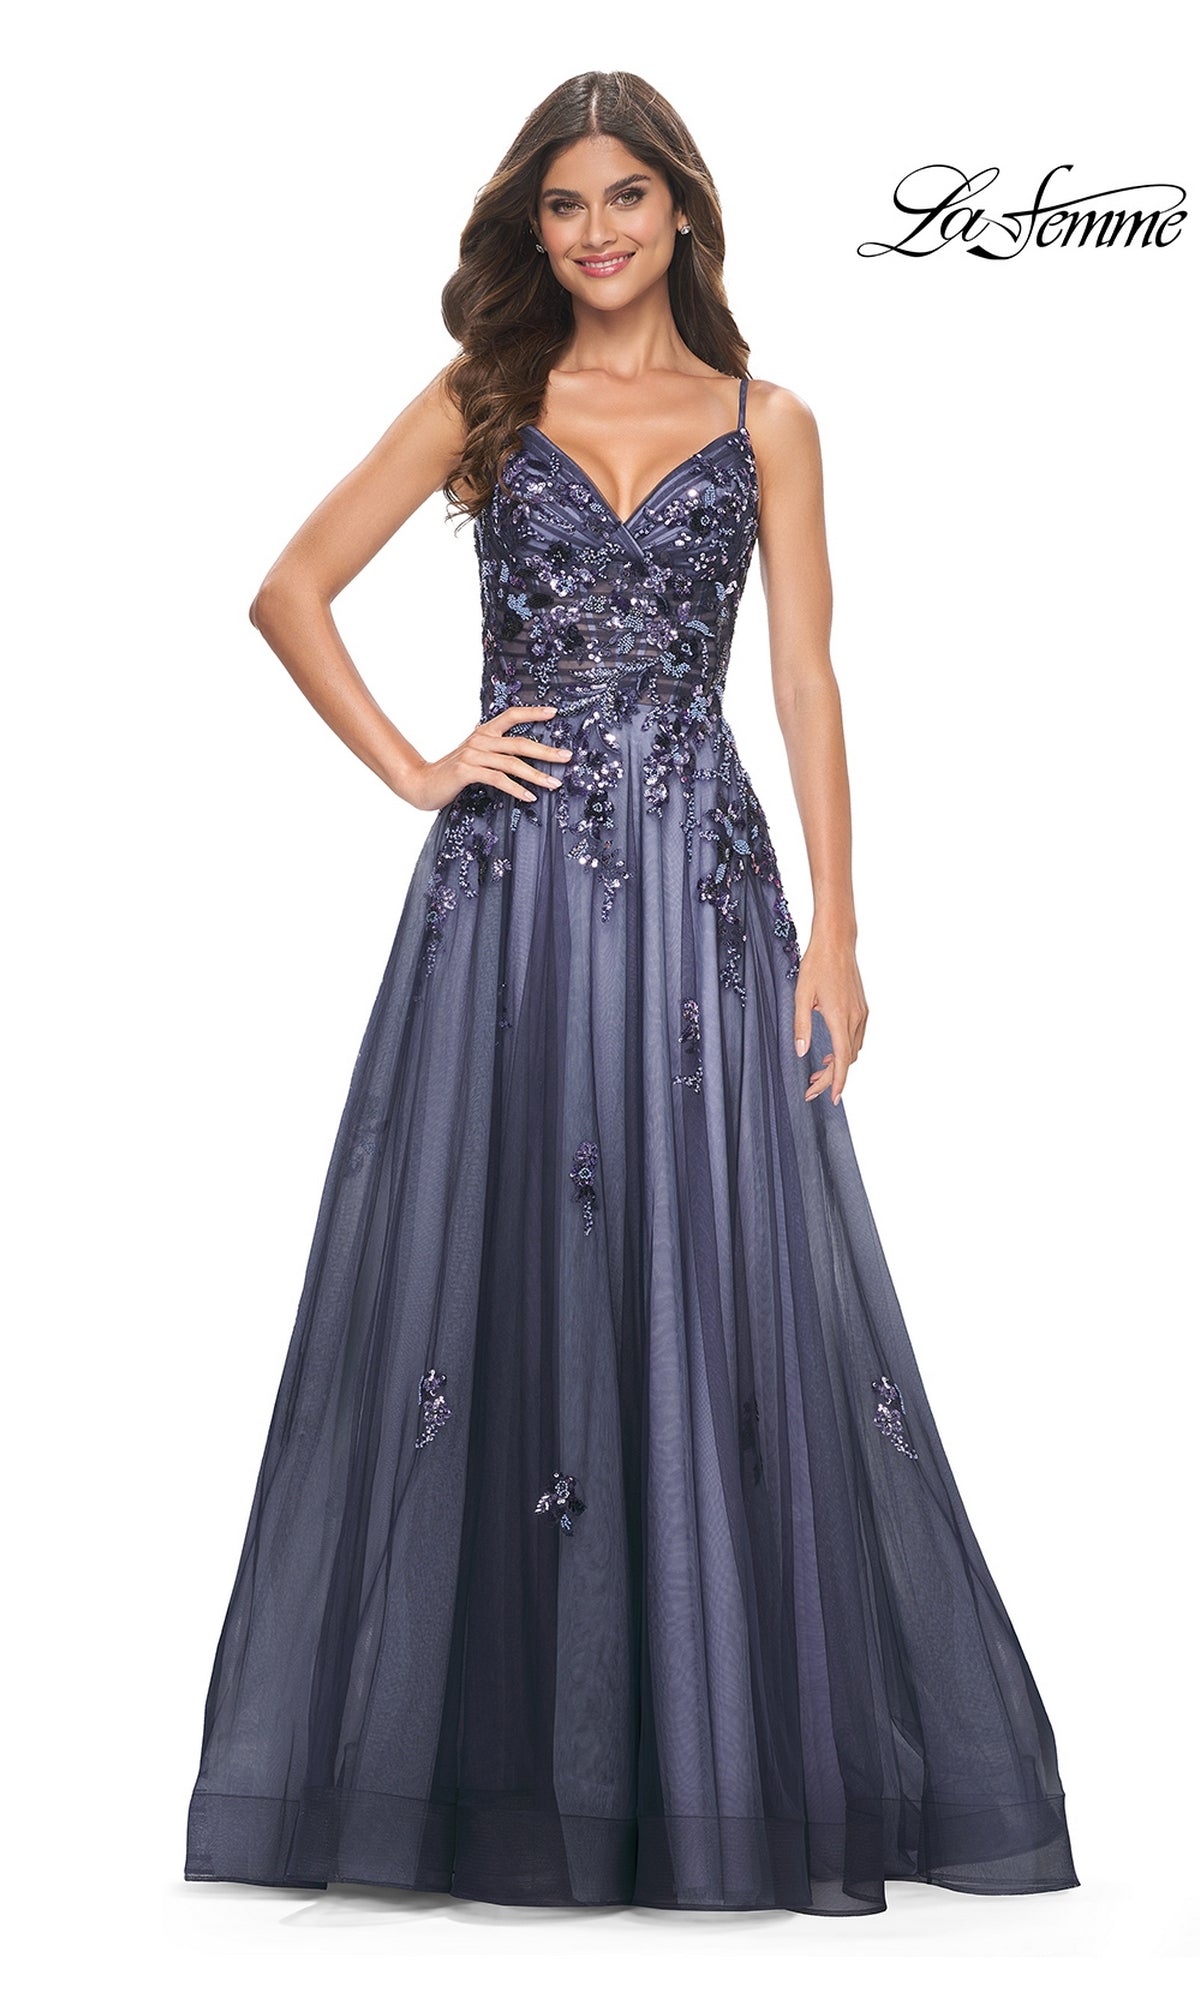  La Femme 32185 Formal Prom Dress